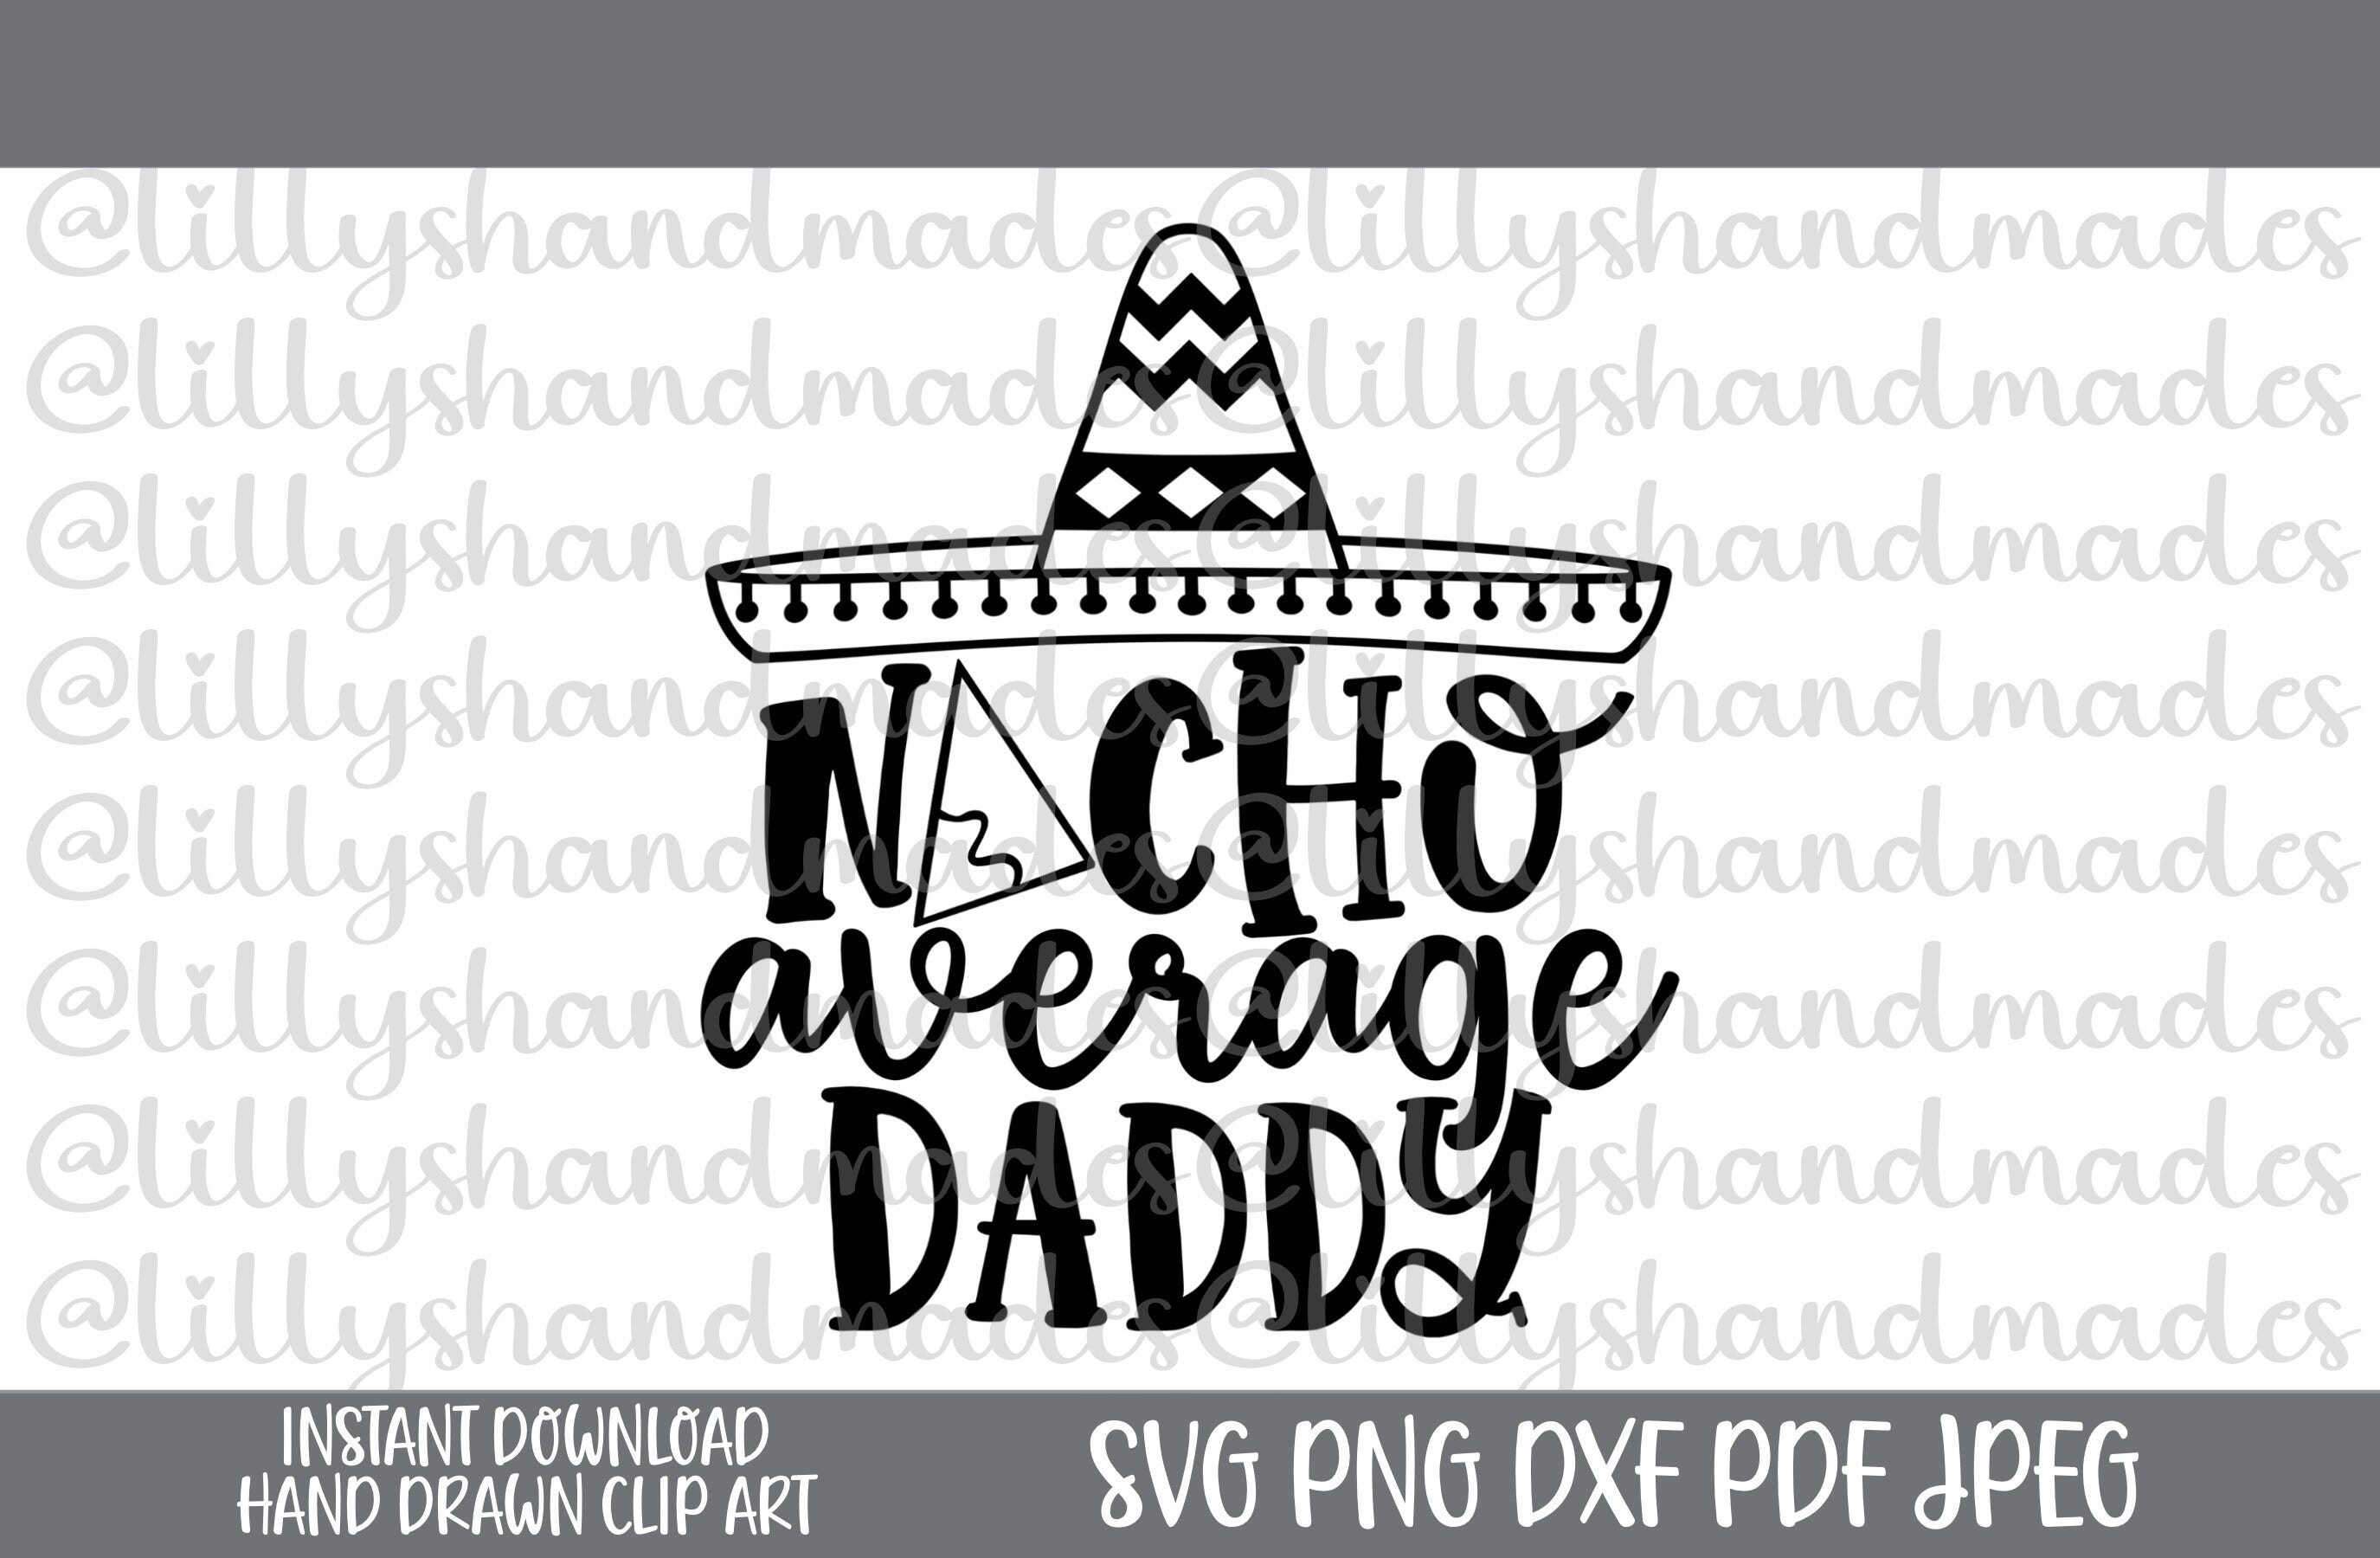 Nacho Average Daddy Svg, Funny Dad Svg, Dad Joke Svg, Awesome Dad Svg, Best Dad Ever Svg, Dad Shirt Svg, Fathers Day Svg, New Dad Svg